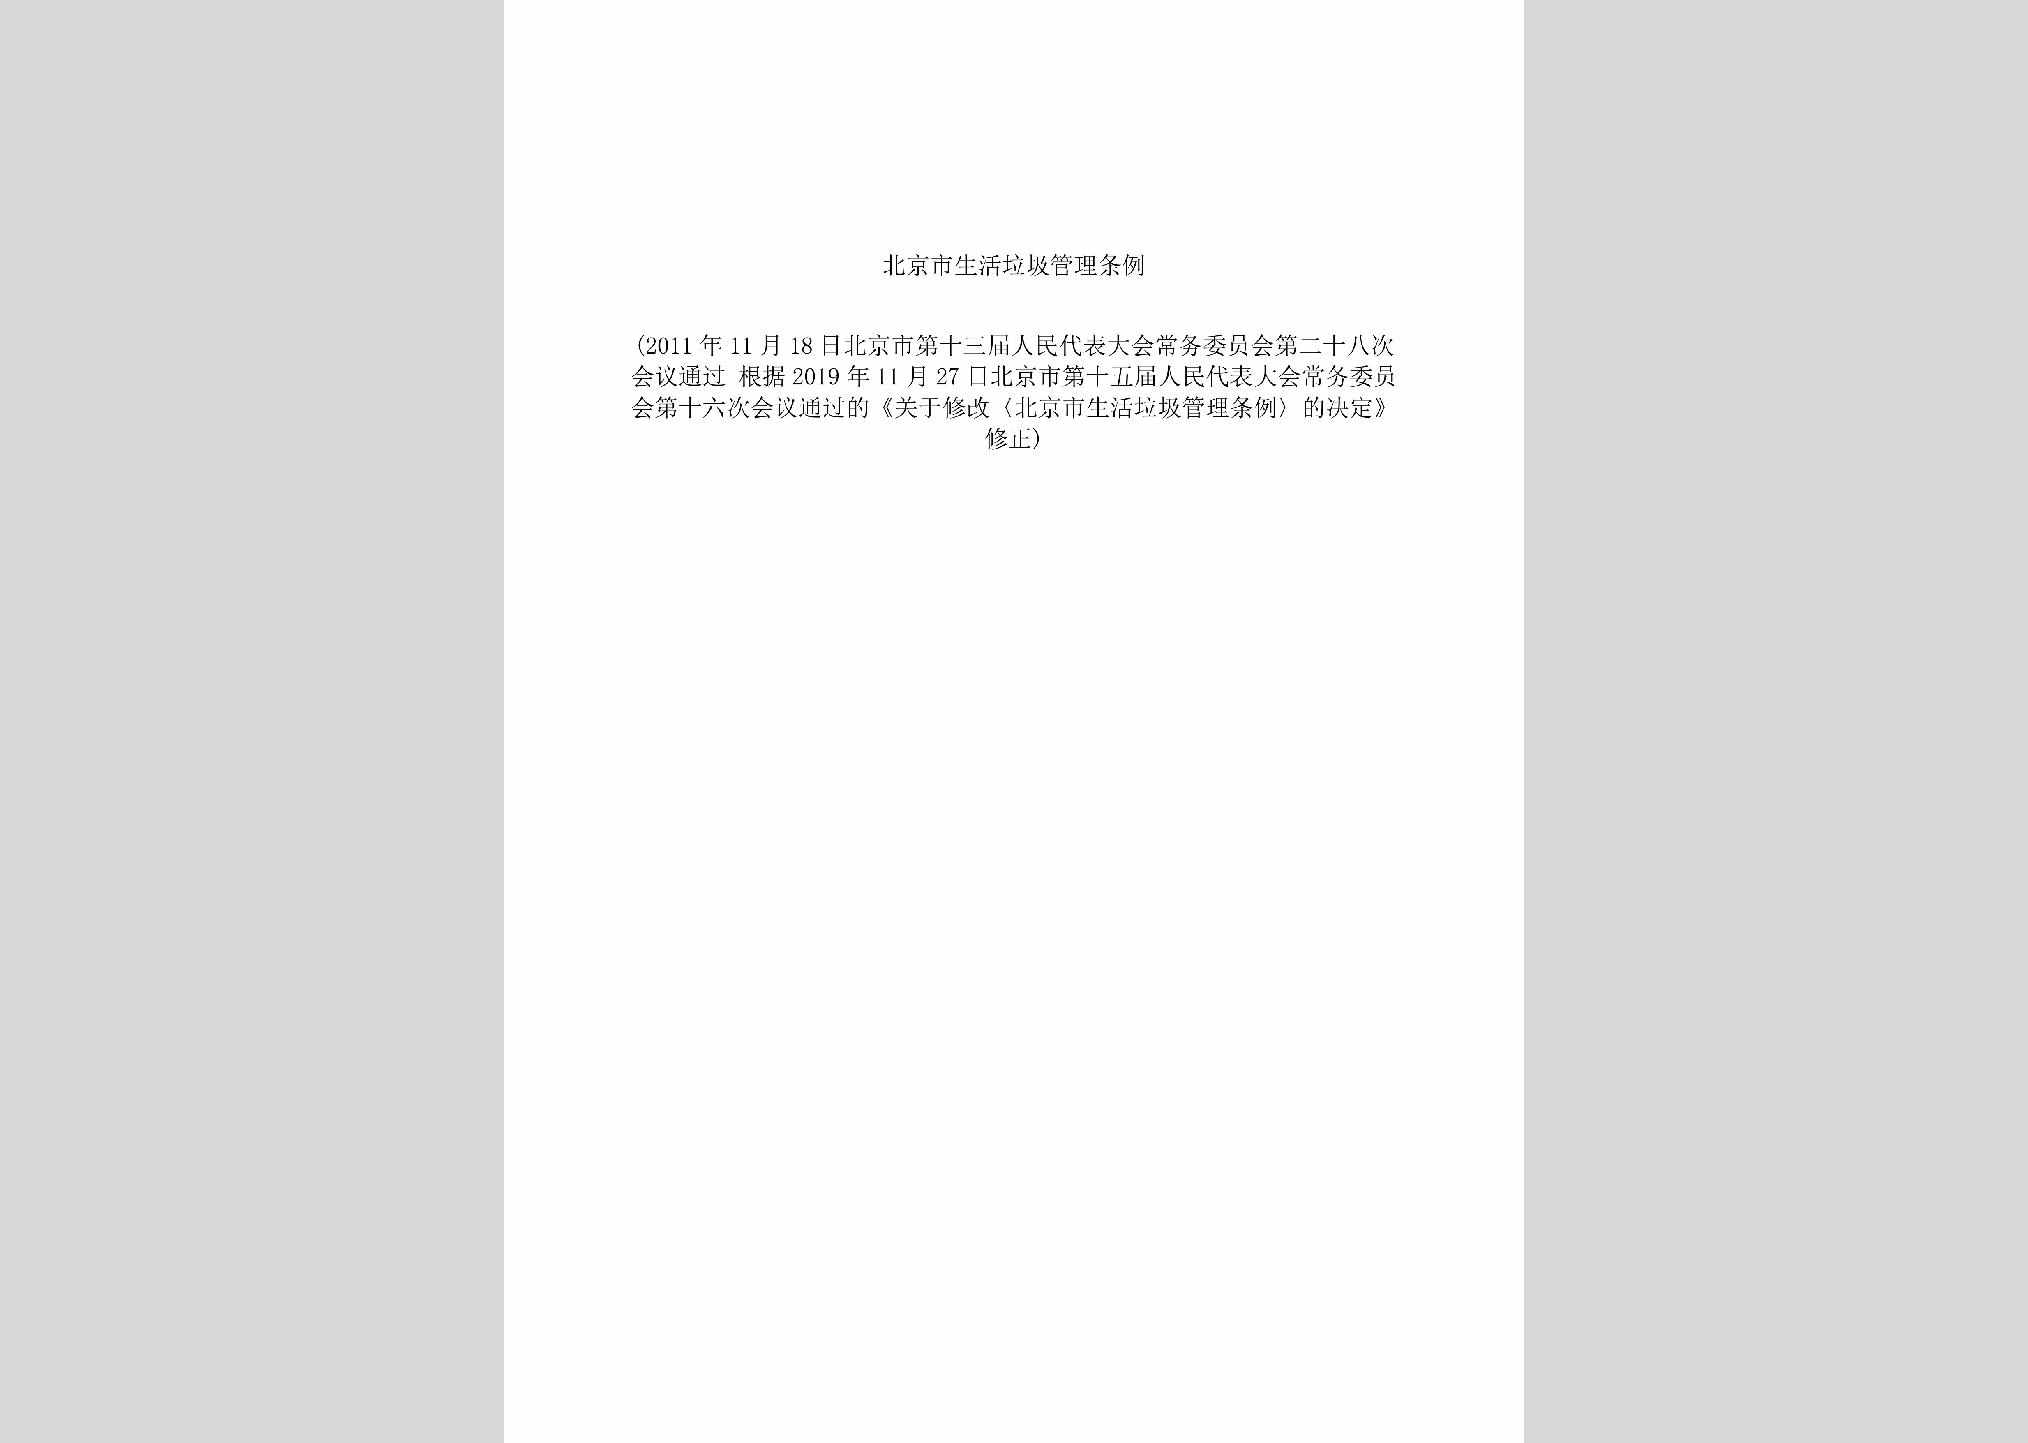 BJ-SHLJGLTL-2019：北京市生活垃圾管理条例